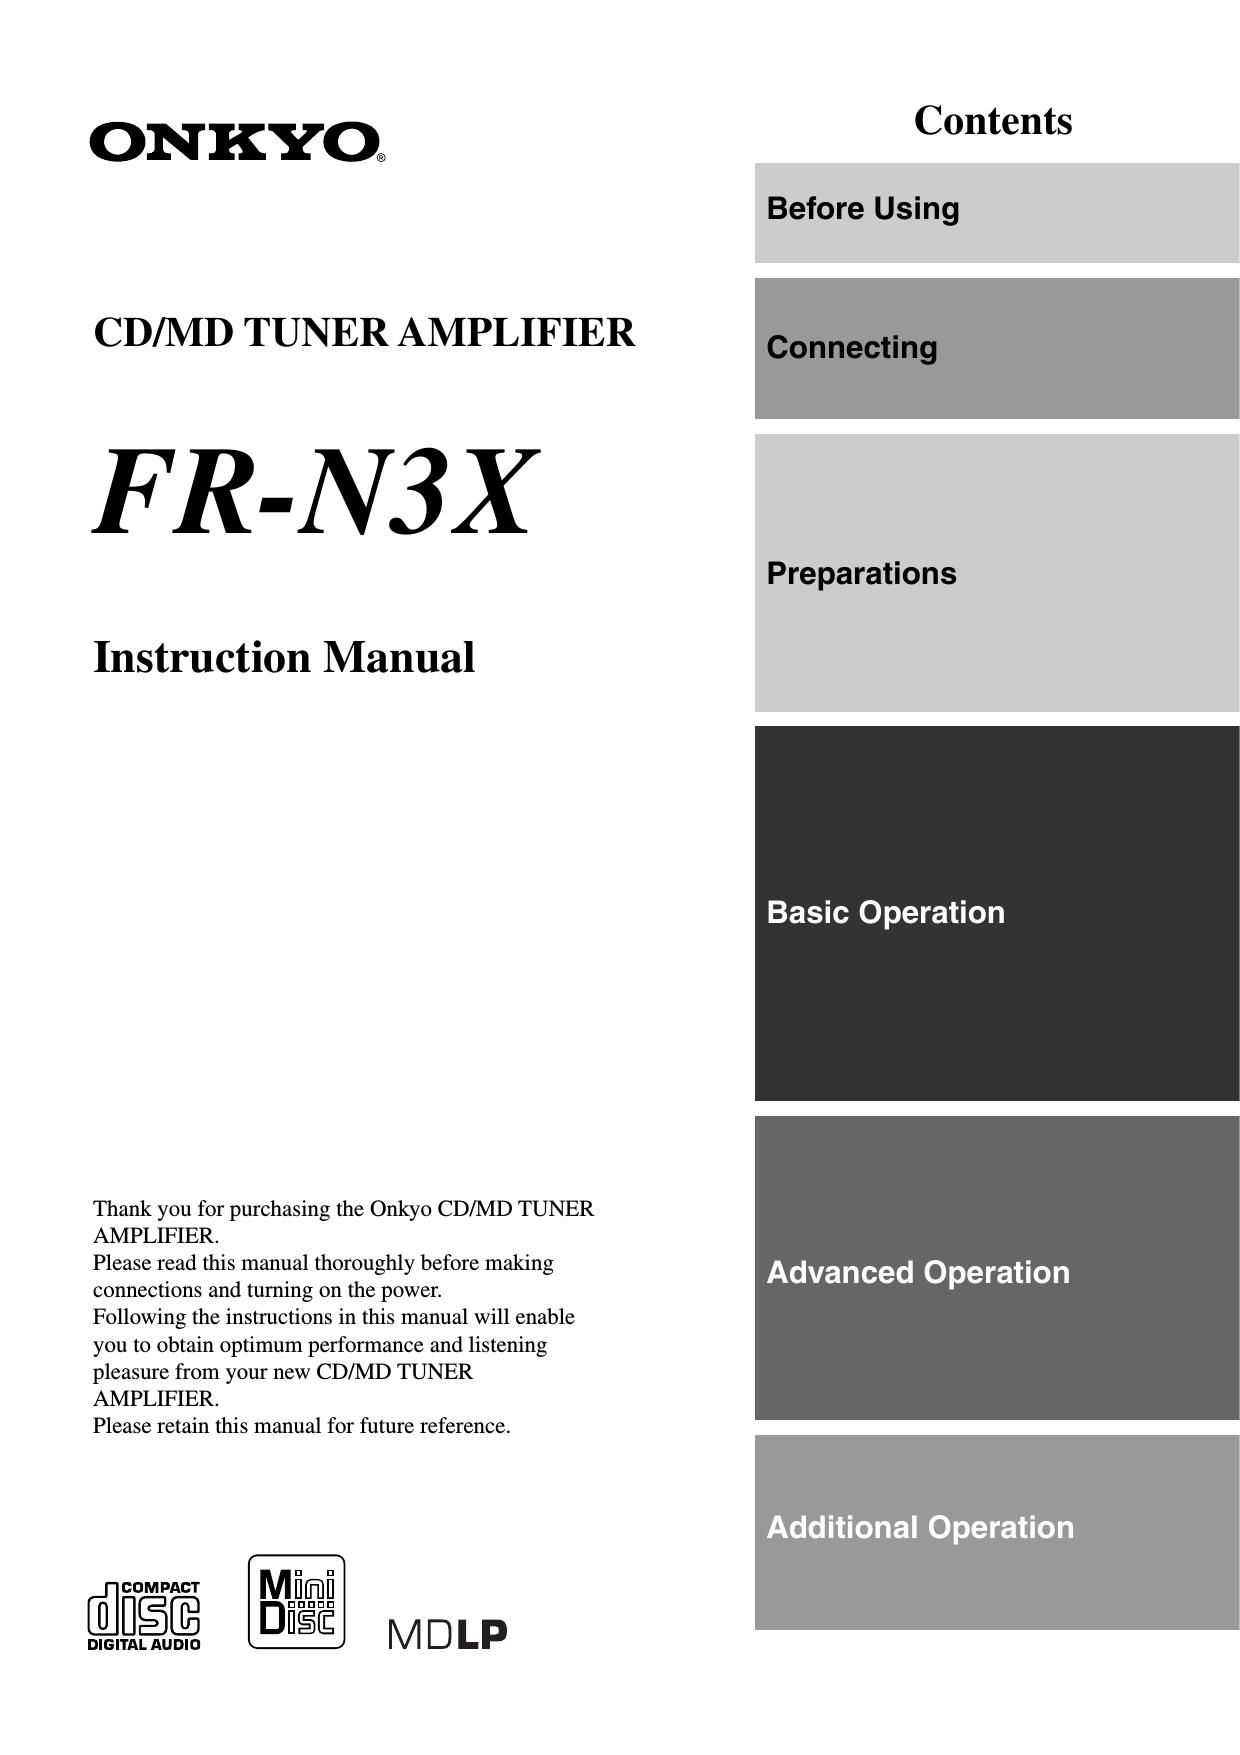 Onkyo FRN 3 X Owners Manual